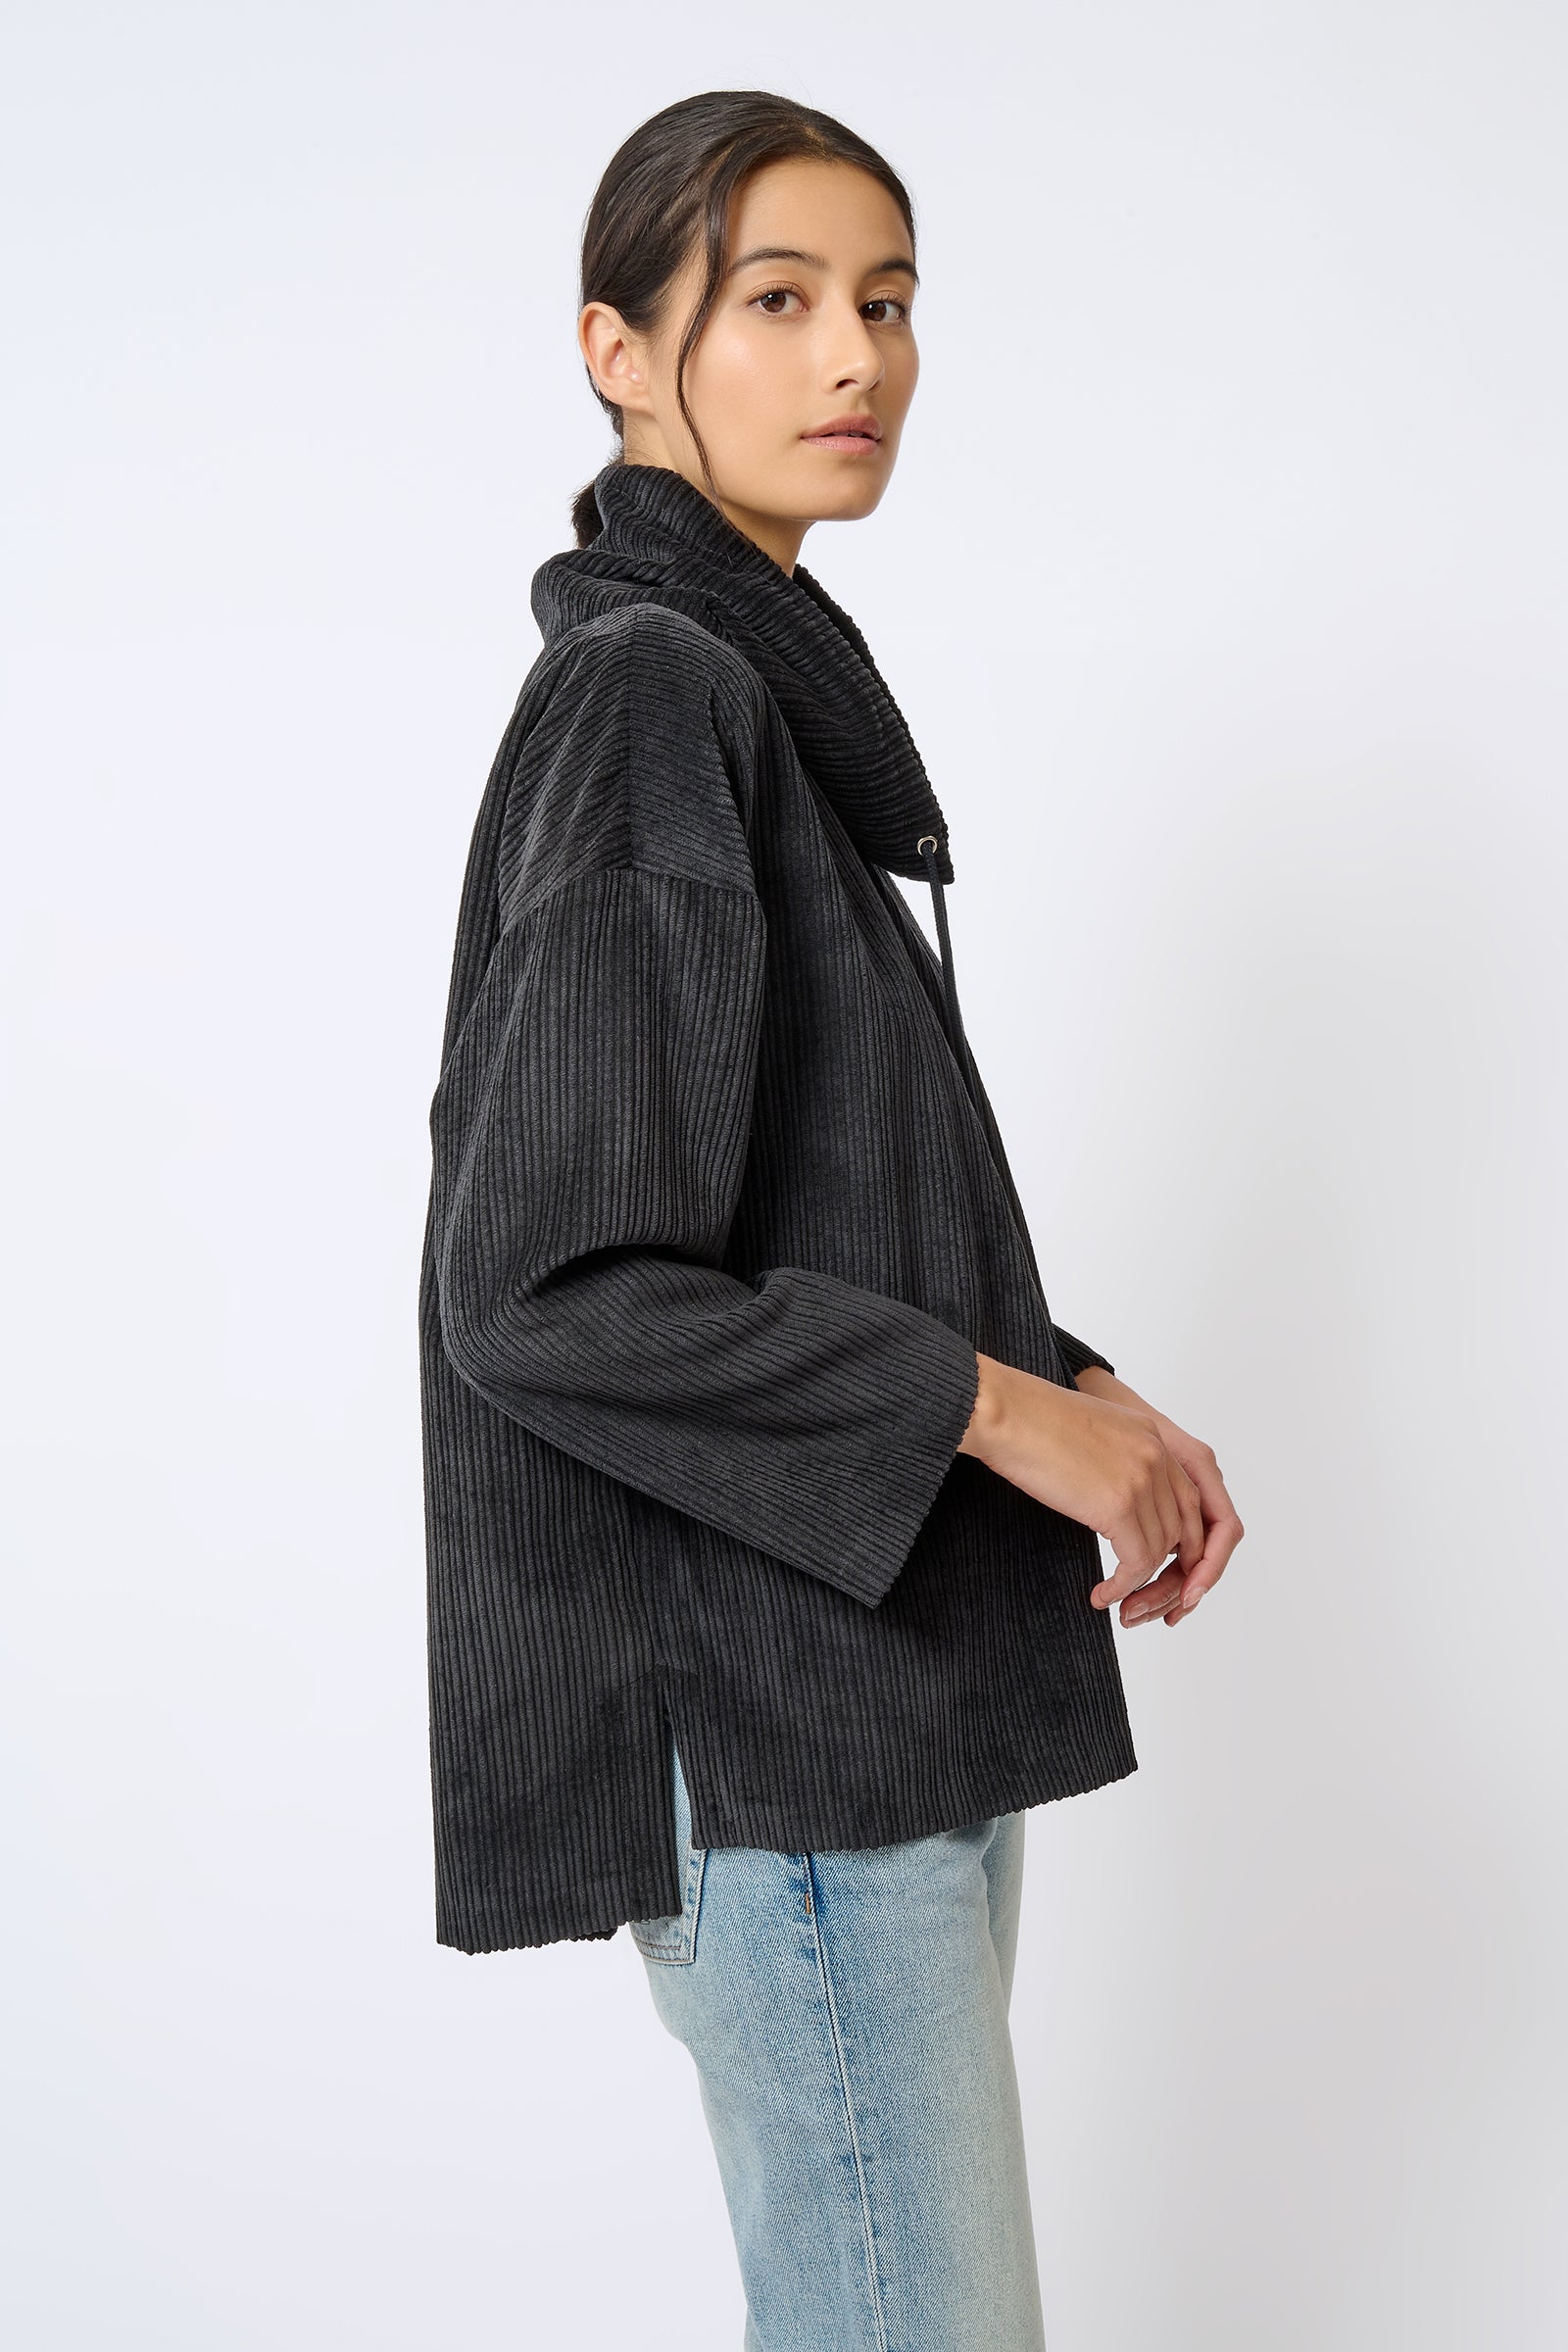 Kal Rieman Debbie Drawstring Pullover in Black on Model Side View